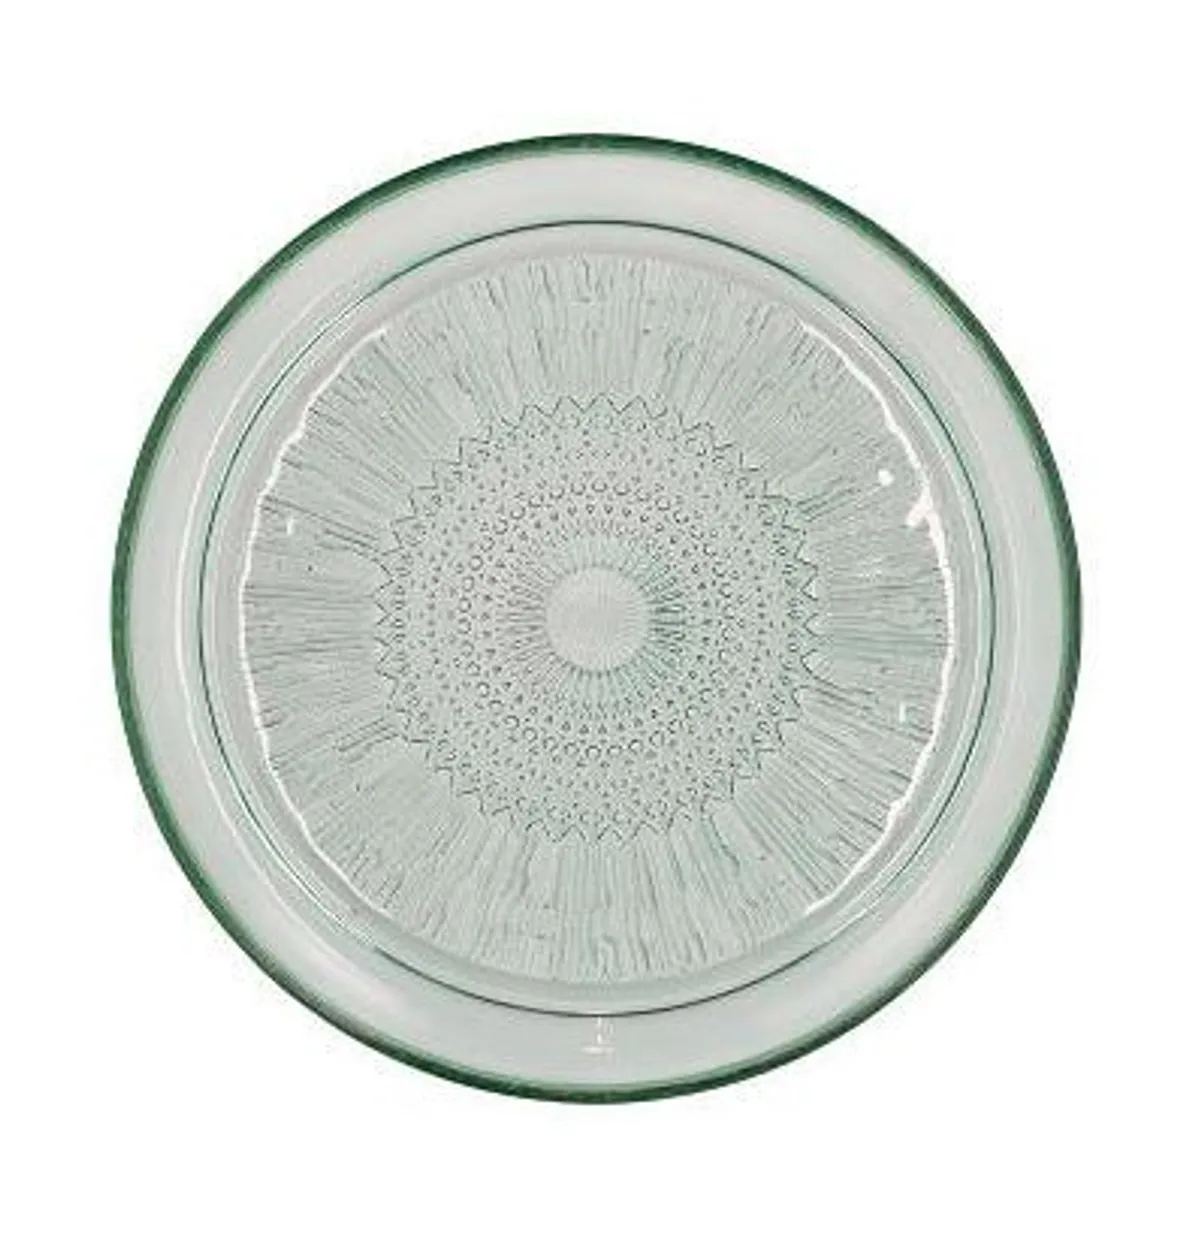 Kusintha glazen bordje 18 cm - groen